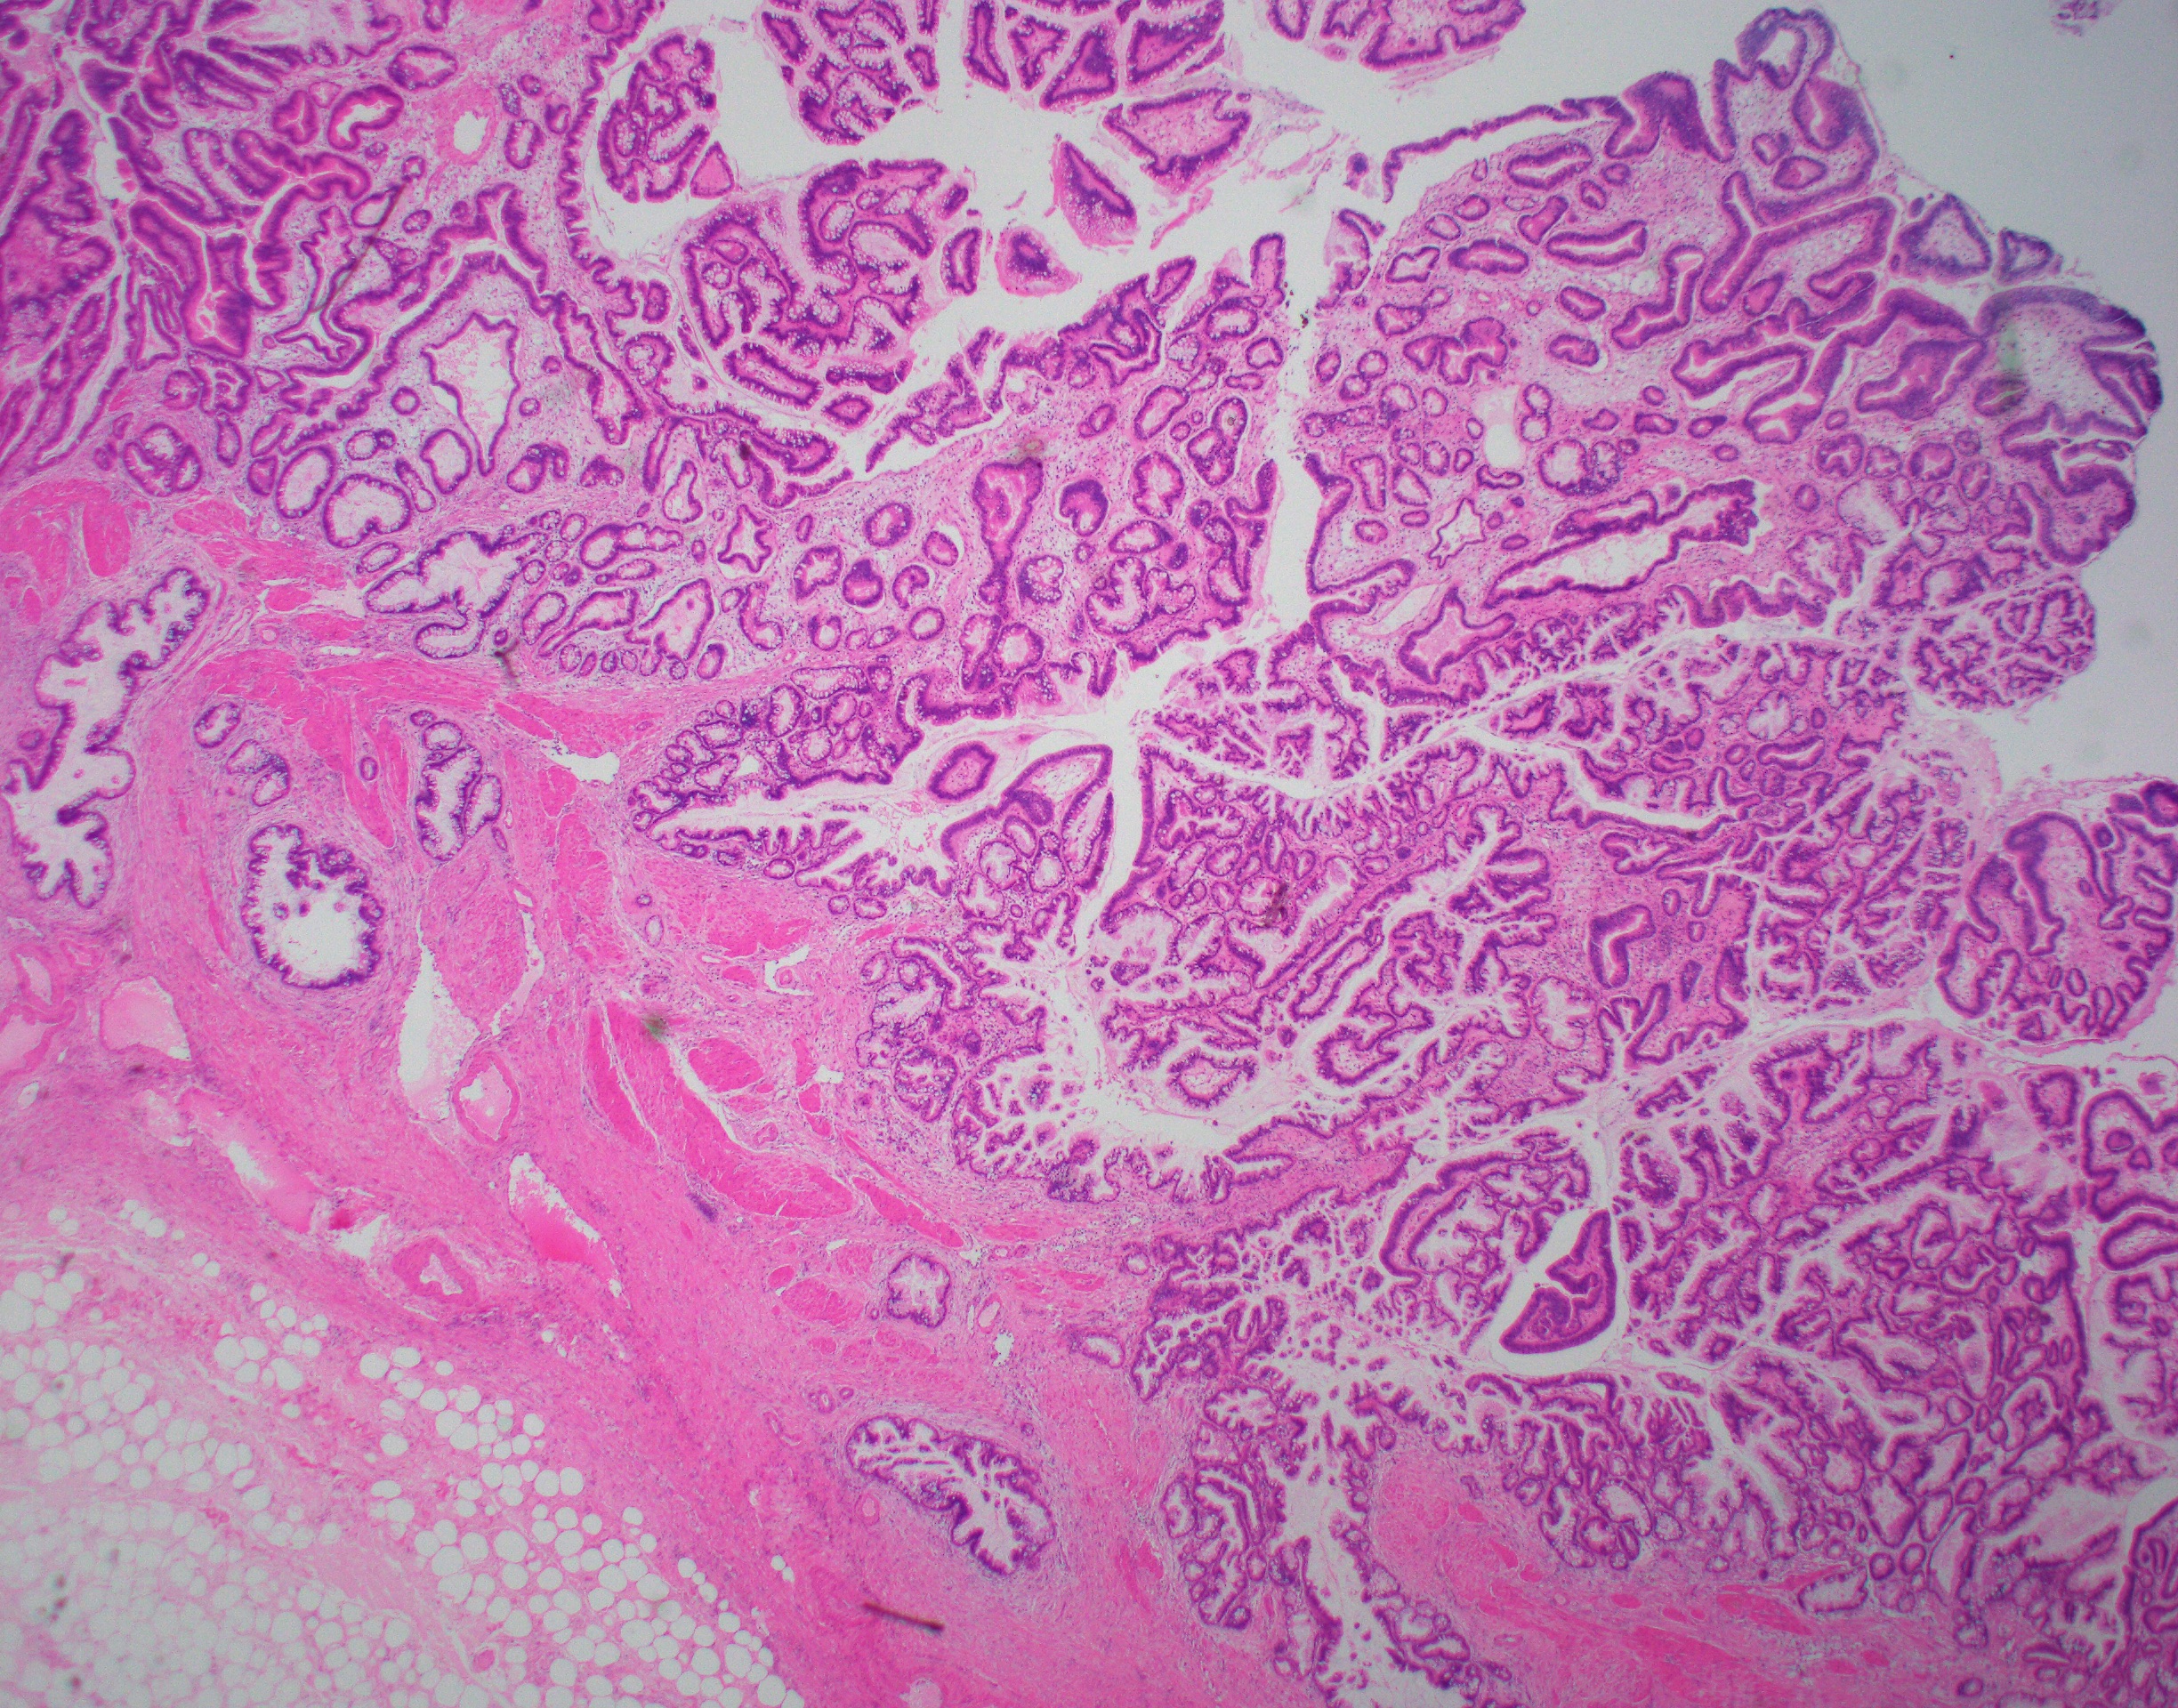 Histology Of Gallbladder